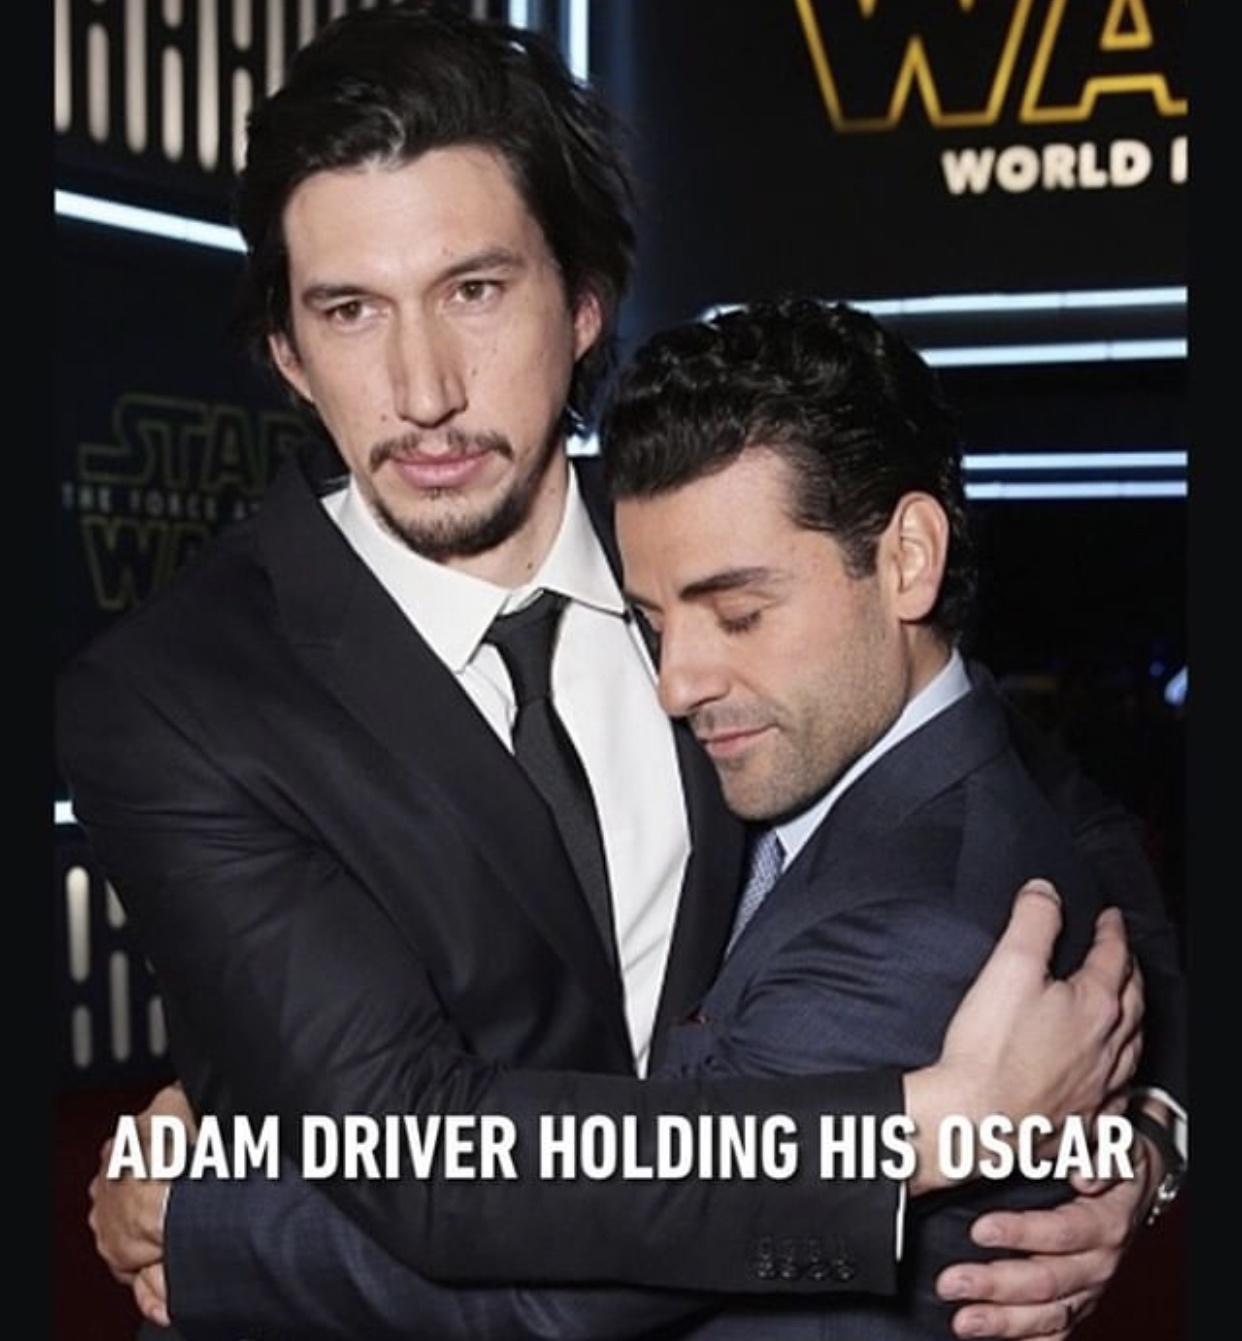 star wars cast hug - We World Adam Driver Holding His Oscar